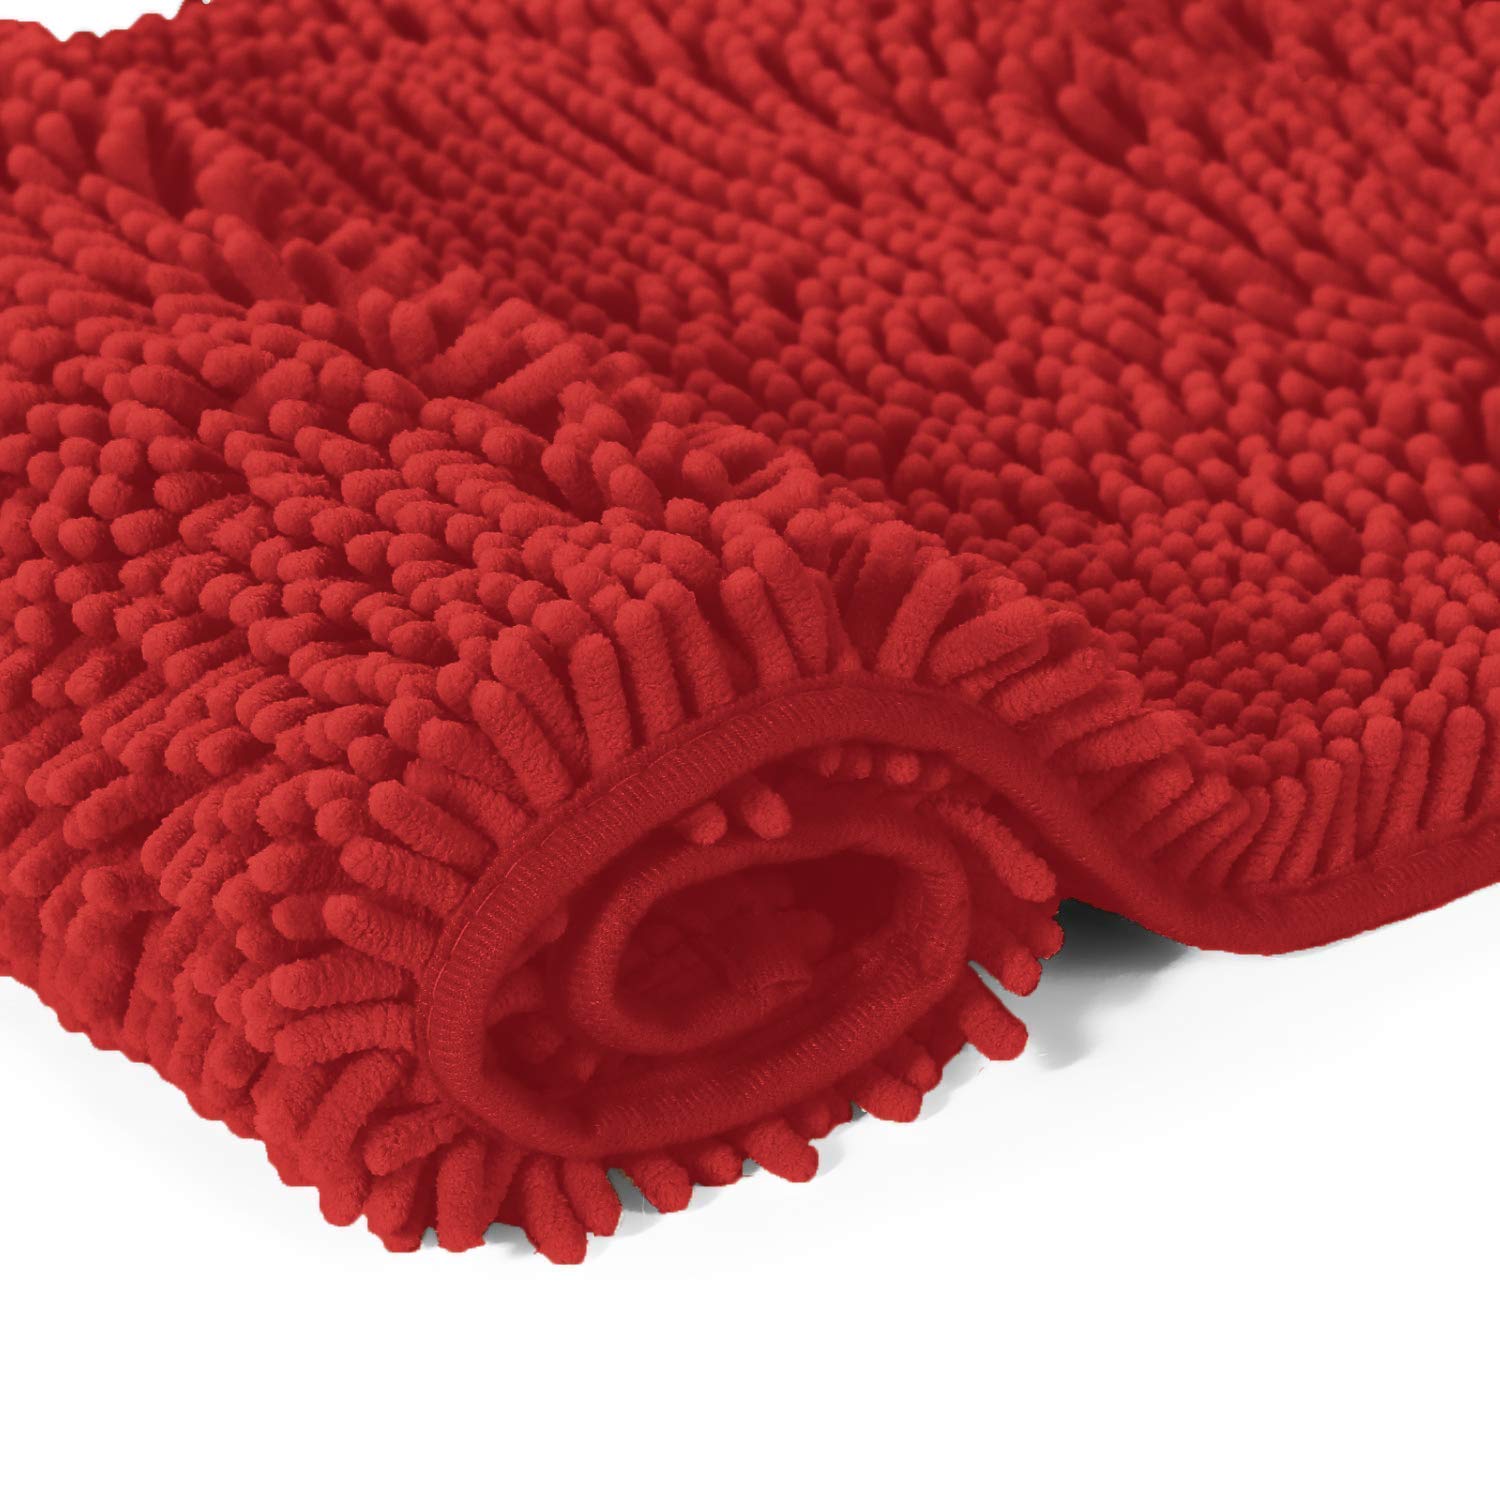 LUXURUX Red Bathroom Rugs Set-Extra-Soft Plush Bath mat Shower Bathroom Rugs,1'' Chenille Microfiber Material, Super Absorbent (Rectangular Set, Red)  - Like New